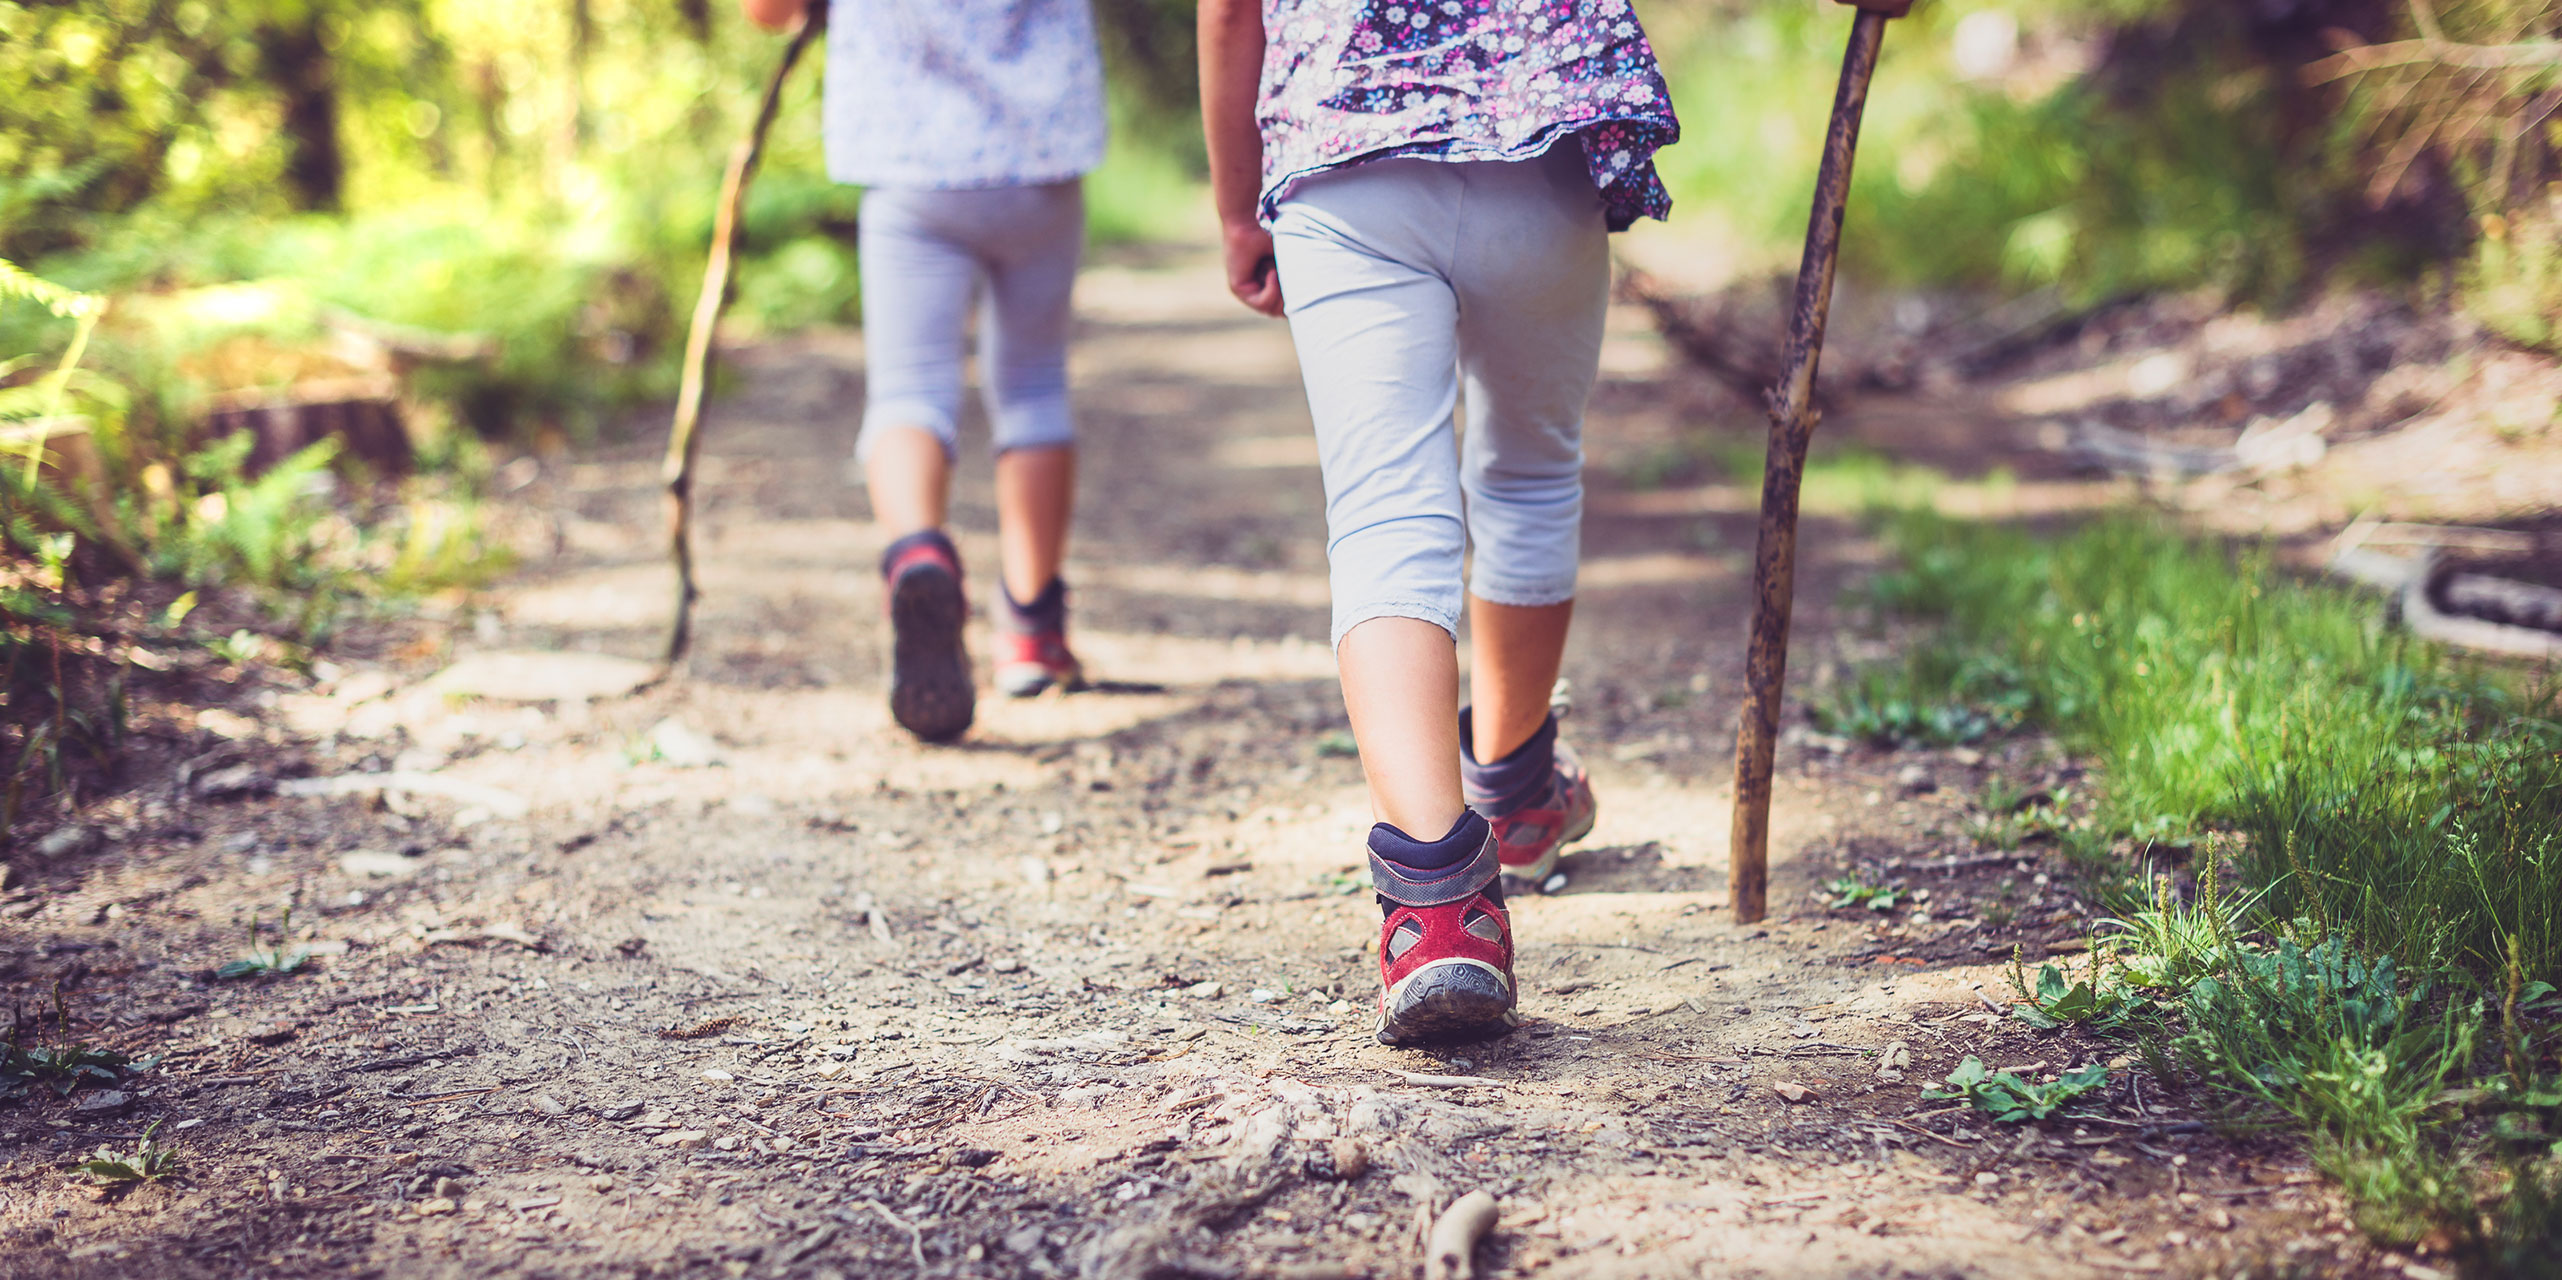 Kids Hiking Boots; Courtesy of JGA/Shutterstock.com